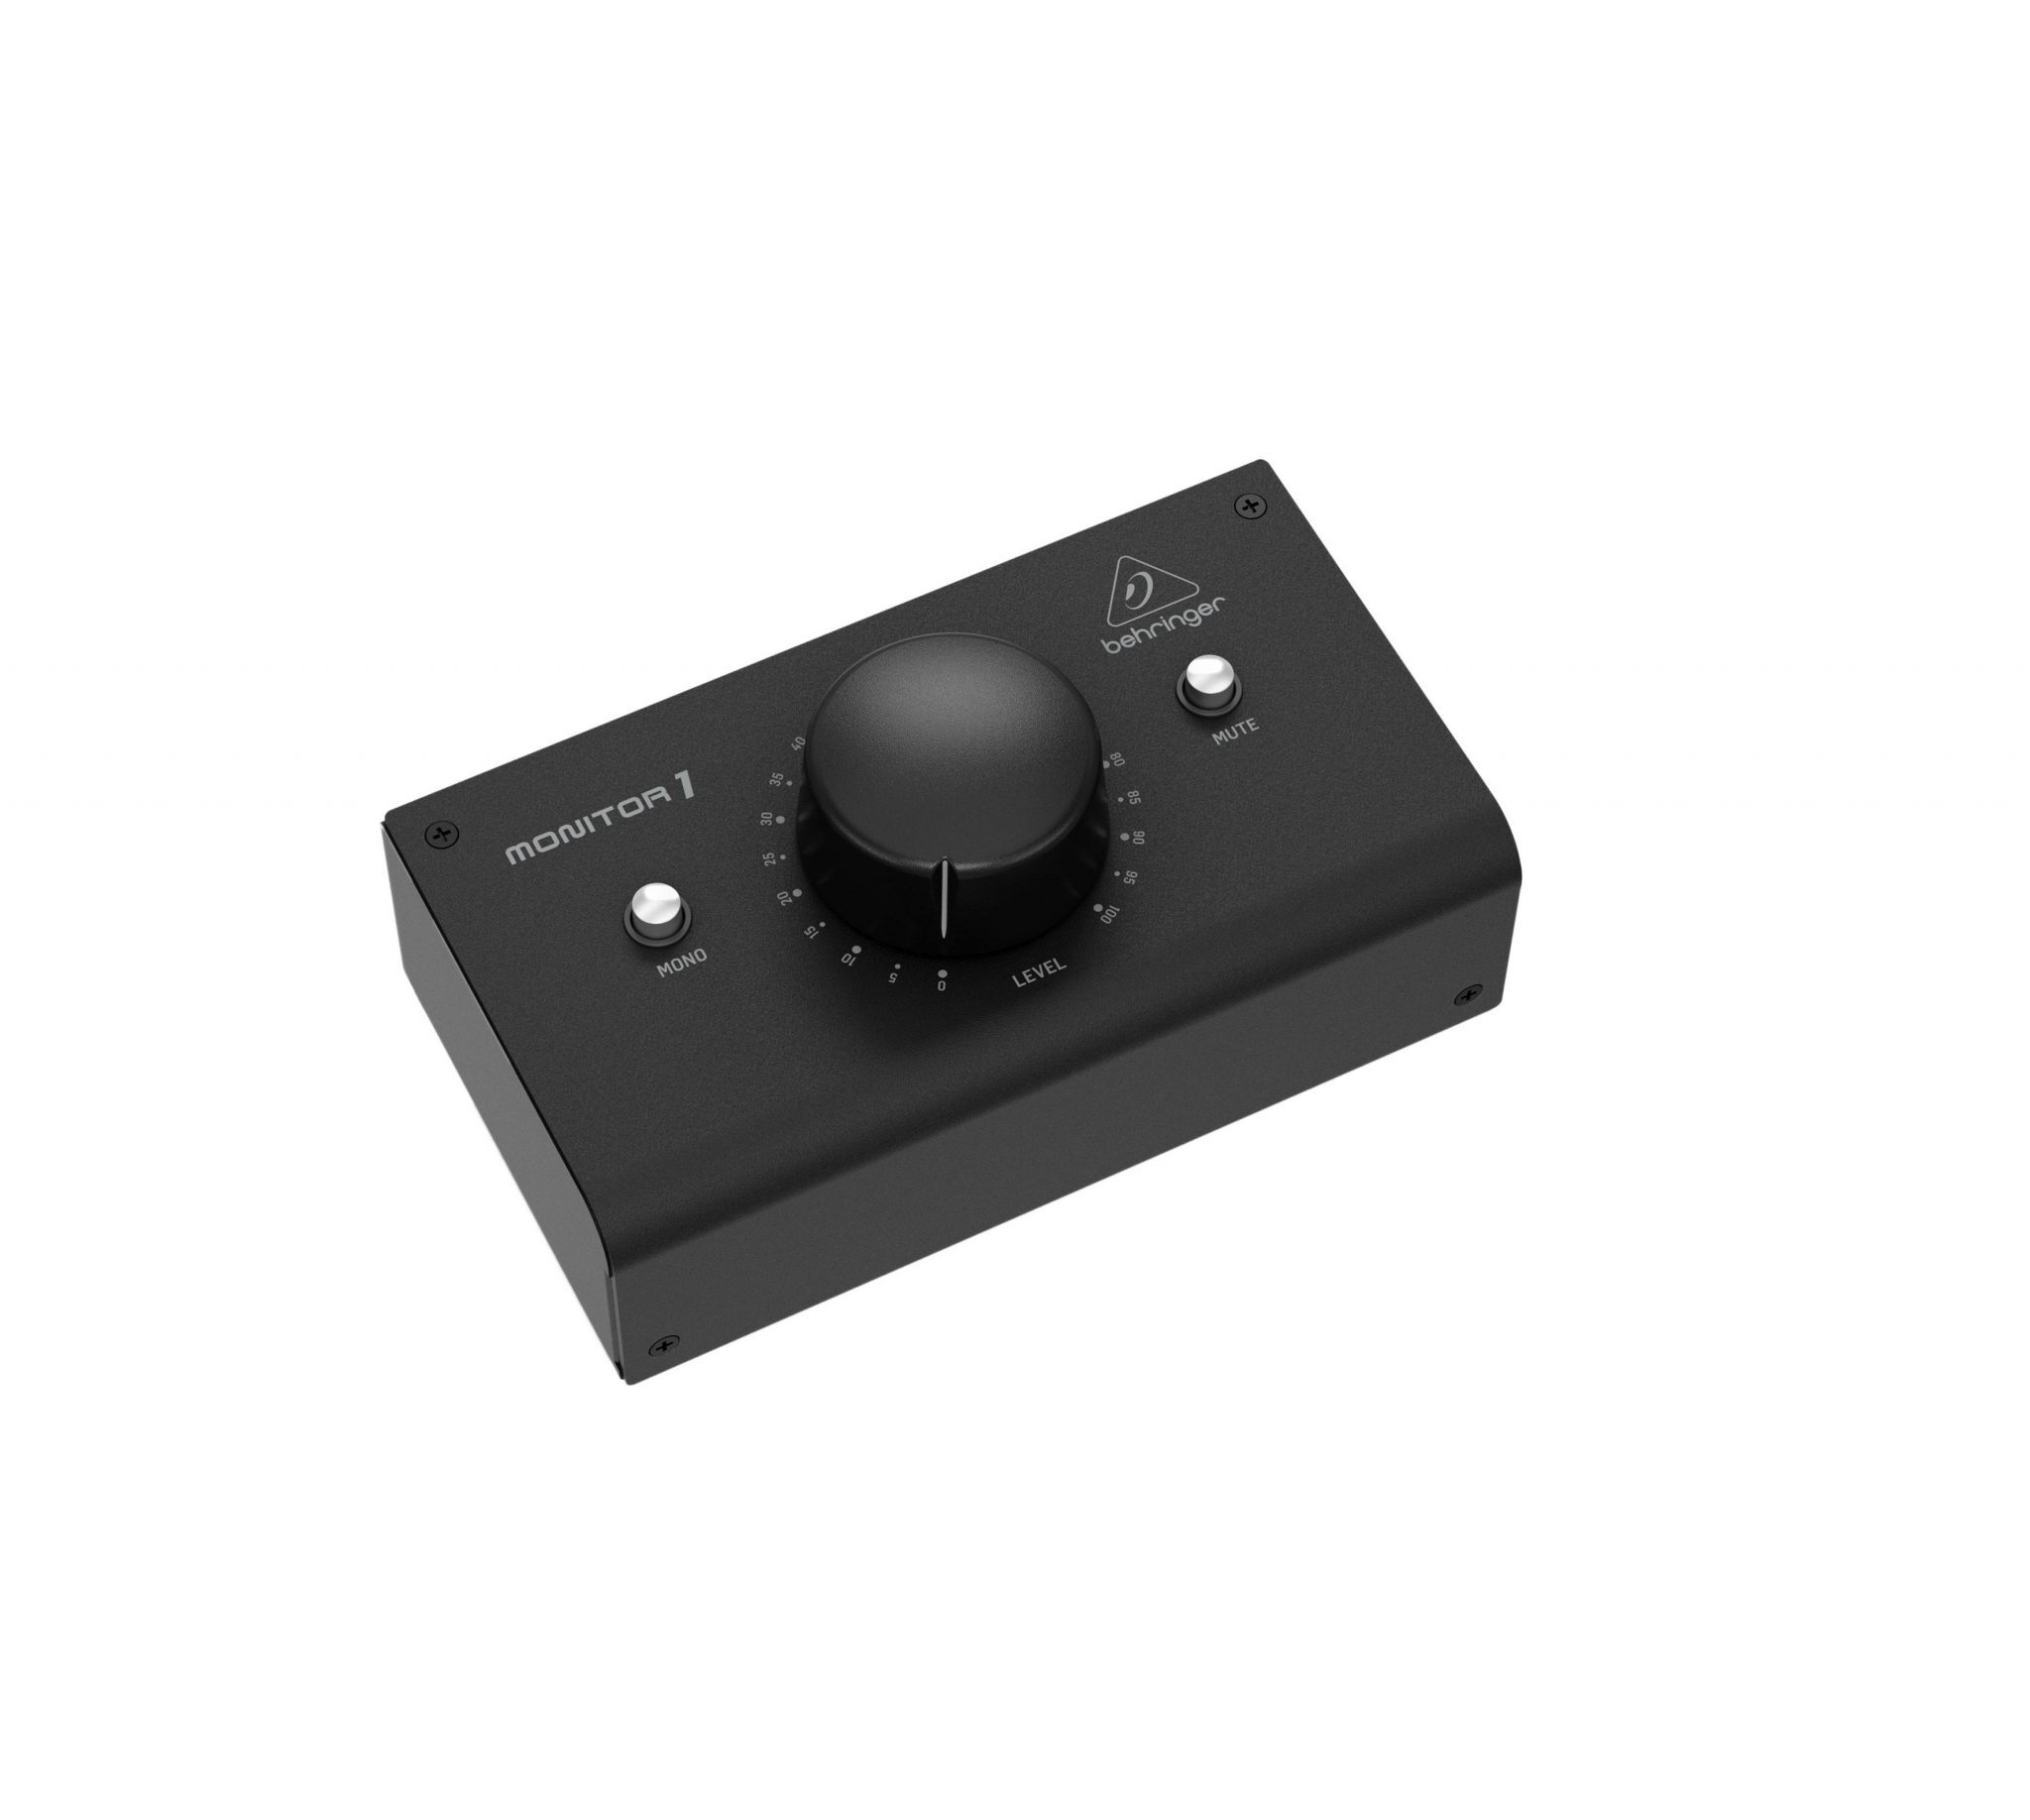 MONITOR1 Premium Passive Stereo Monitor and Volume Controller